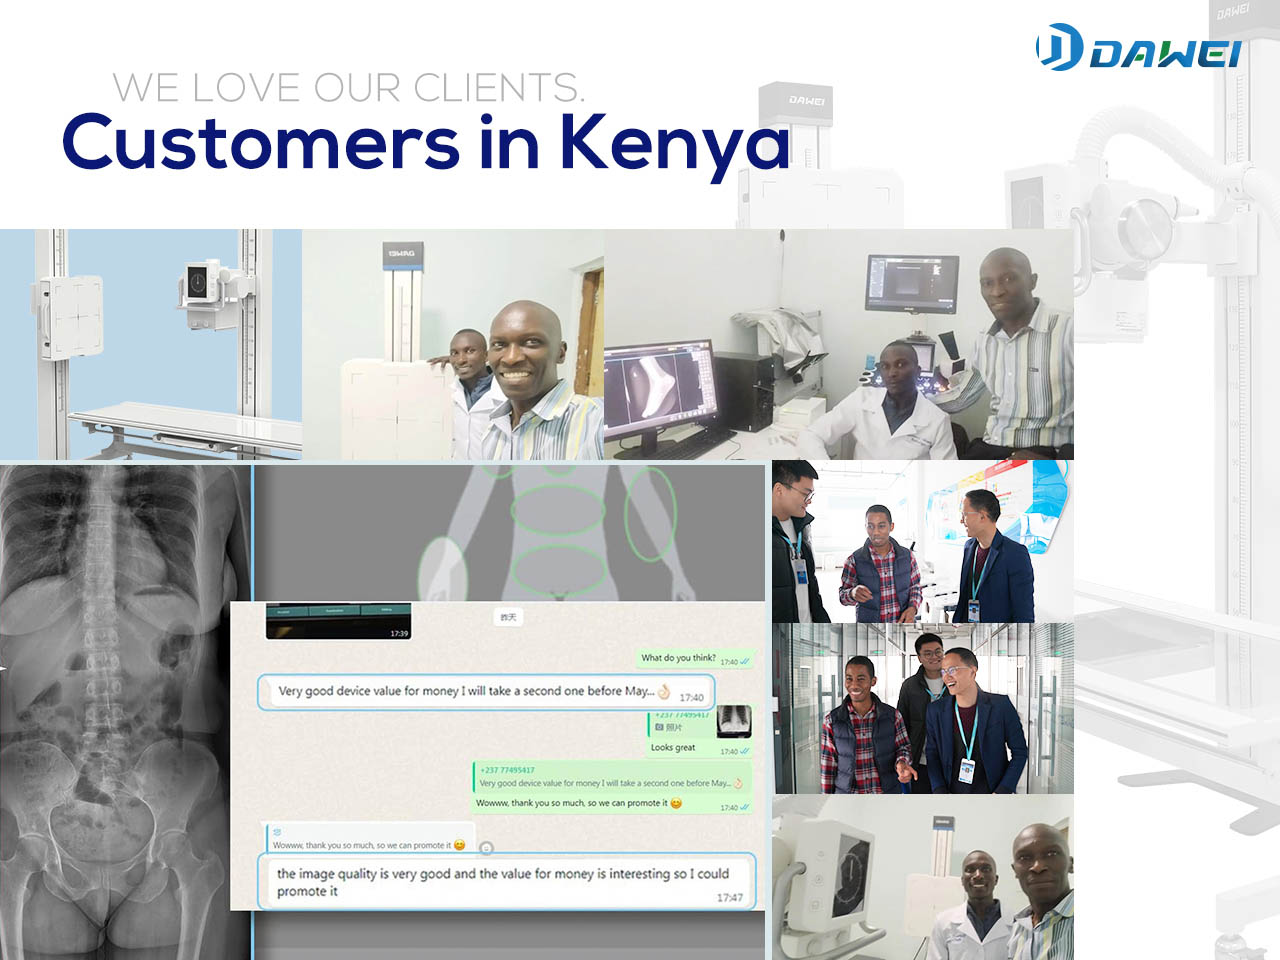 Customers feedback in Kenya